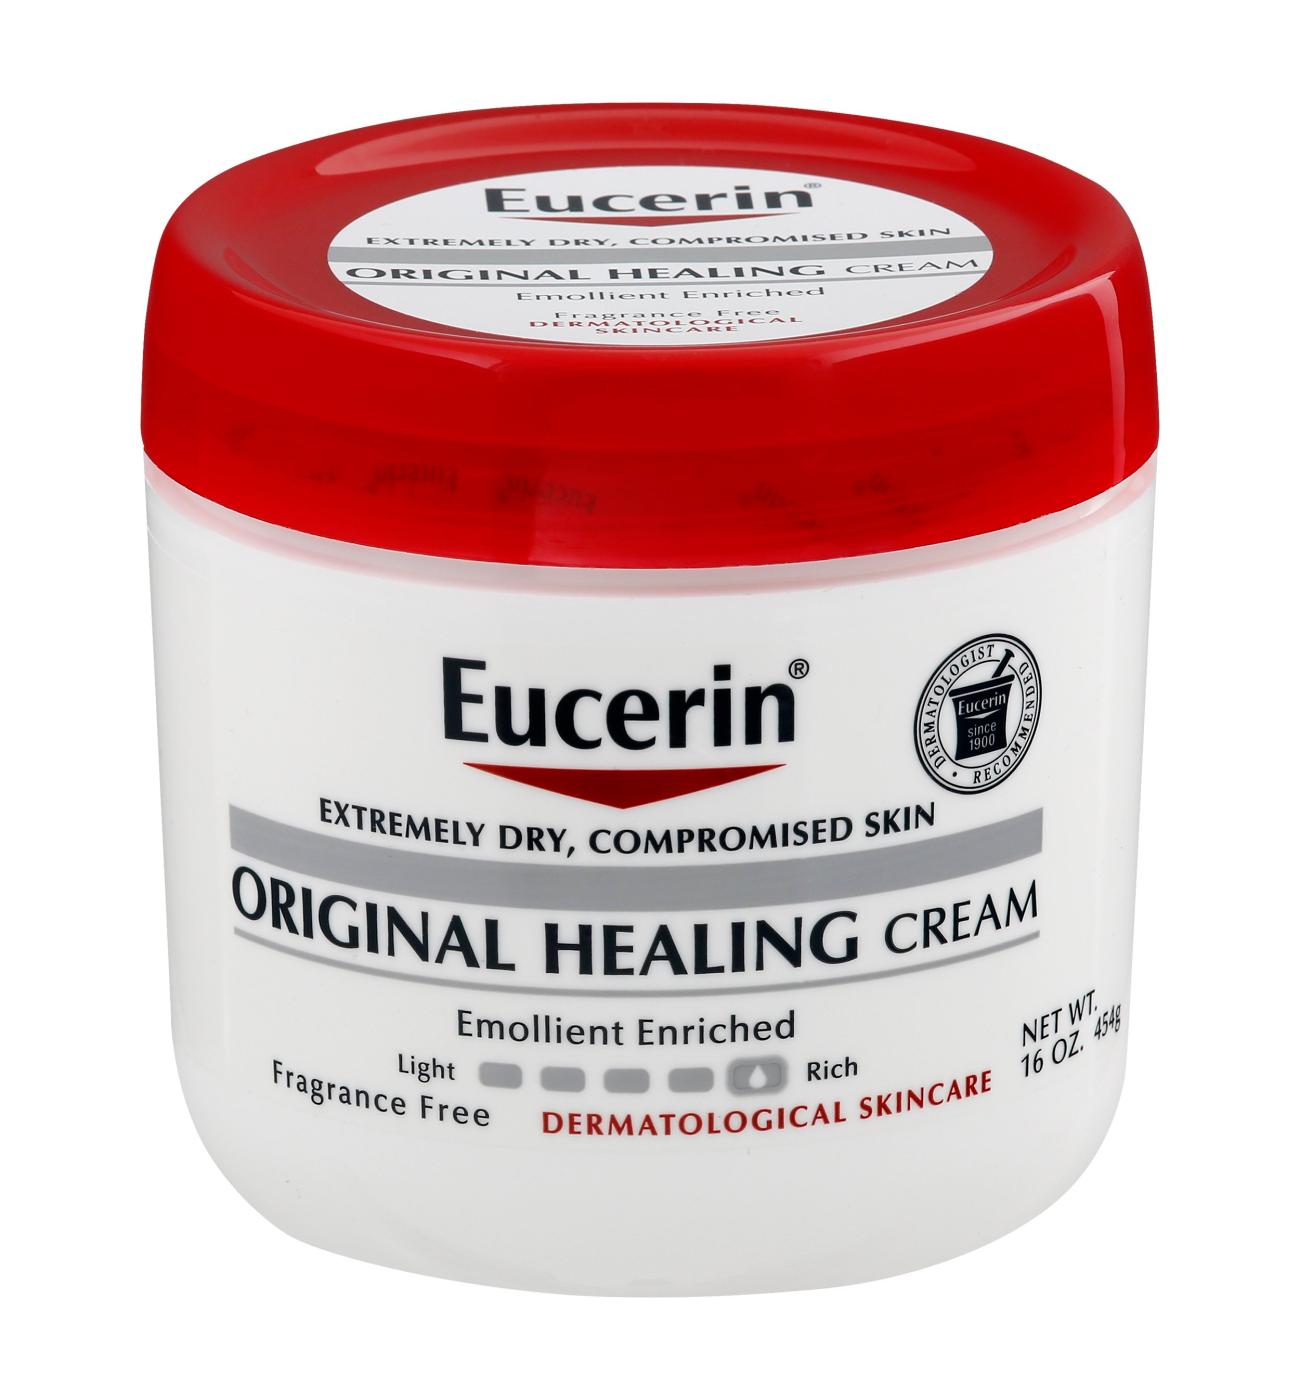 Eucerin Original Healing Rich Cream; image 1 of 4